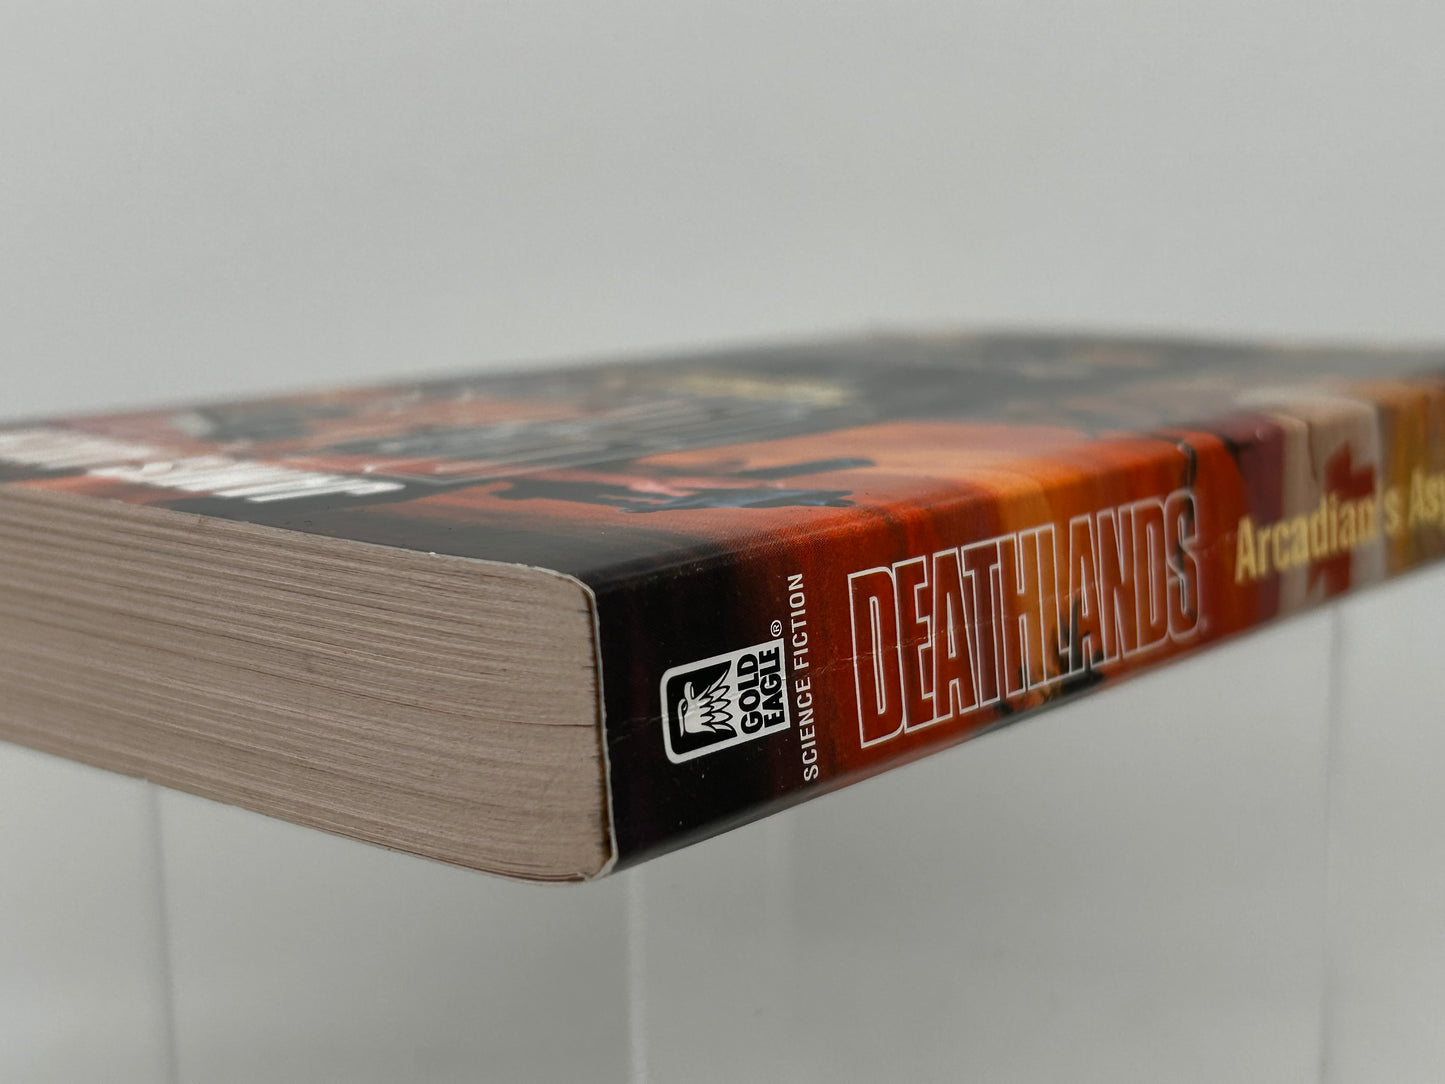 Death Lands: Arcadian's Asylum GOLD EAGLE Paperback James Axler SF11